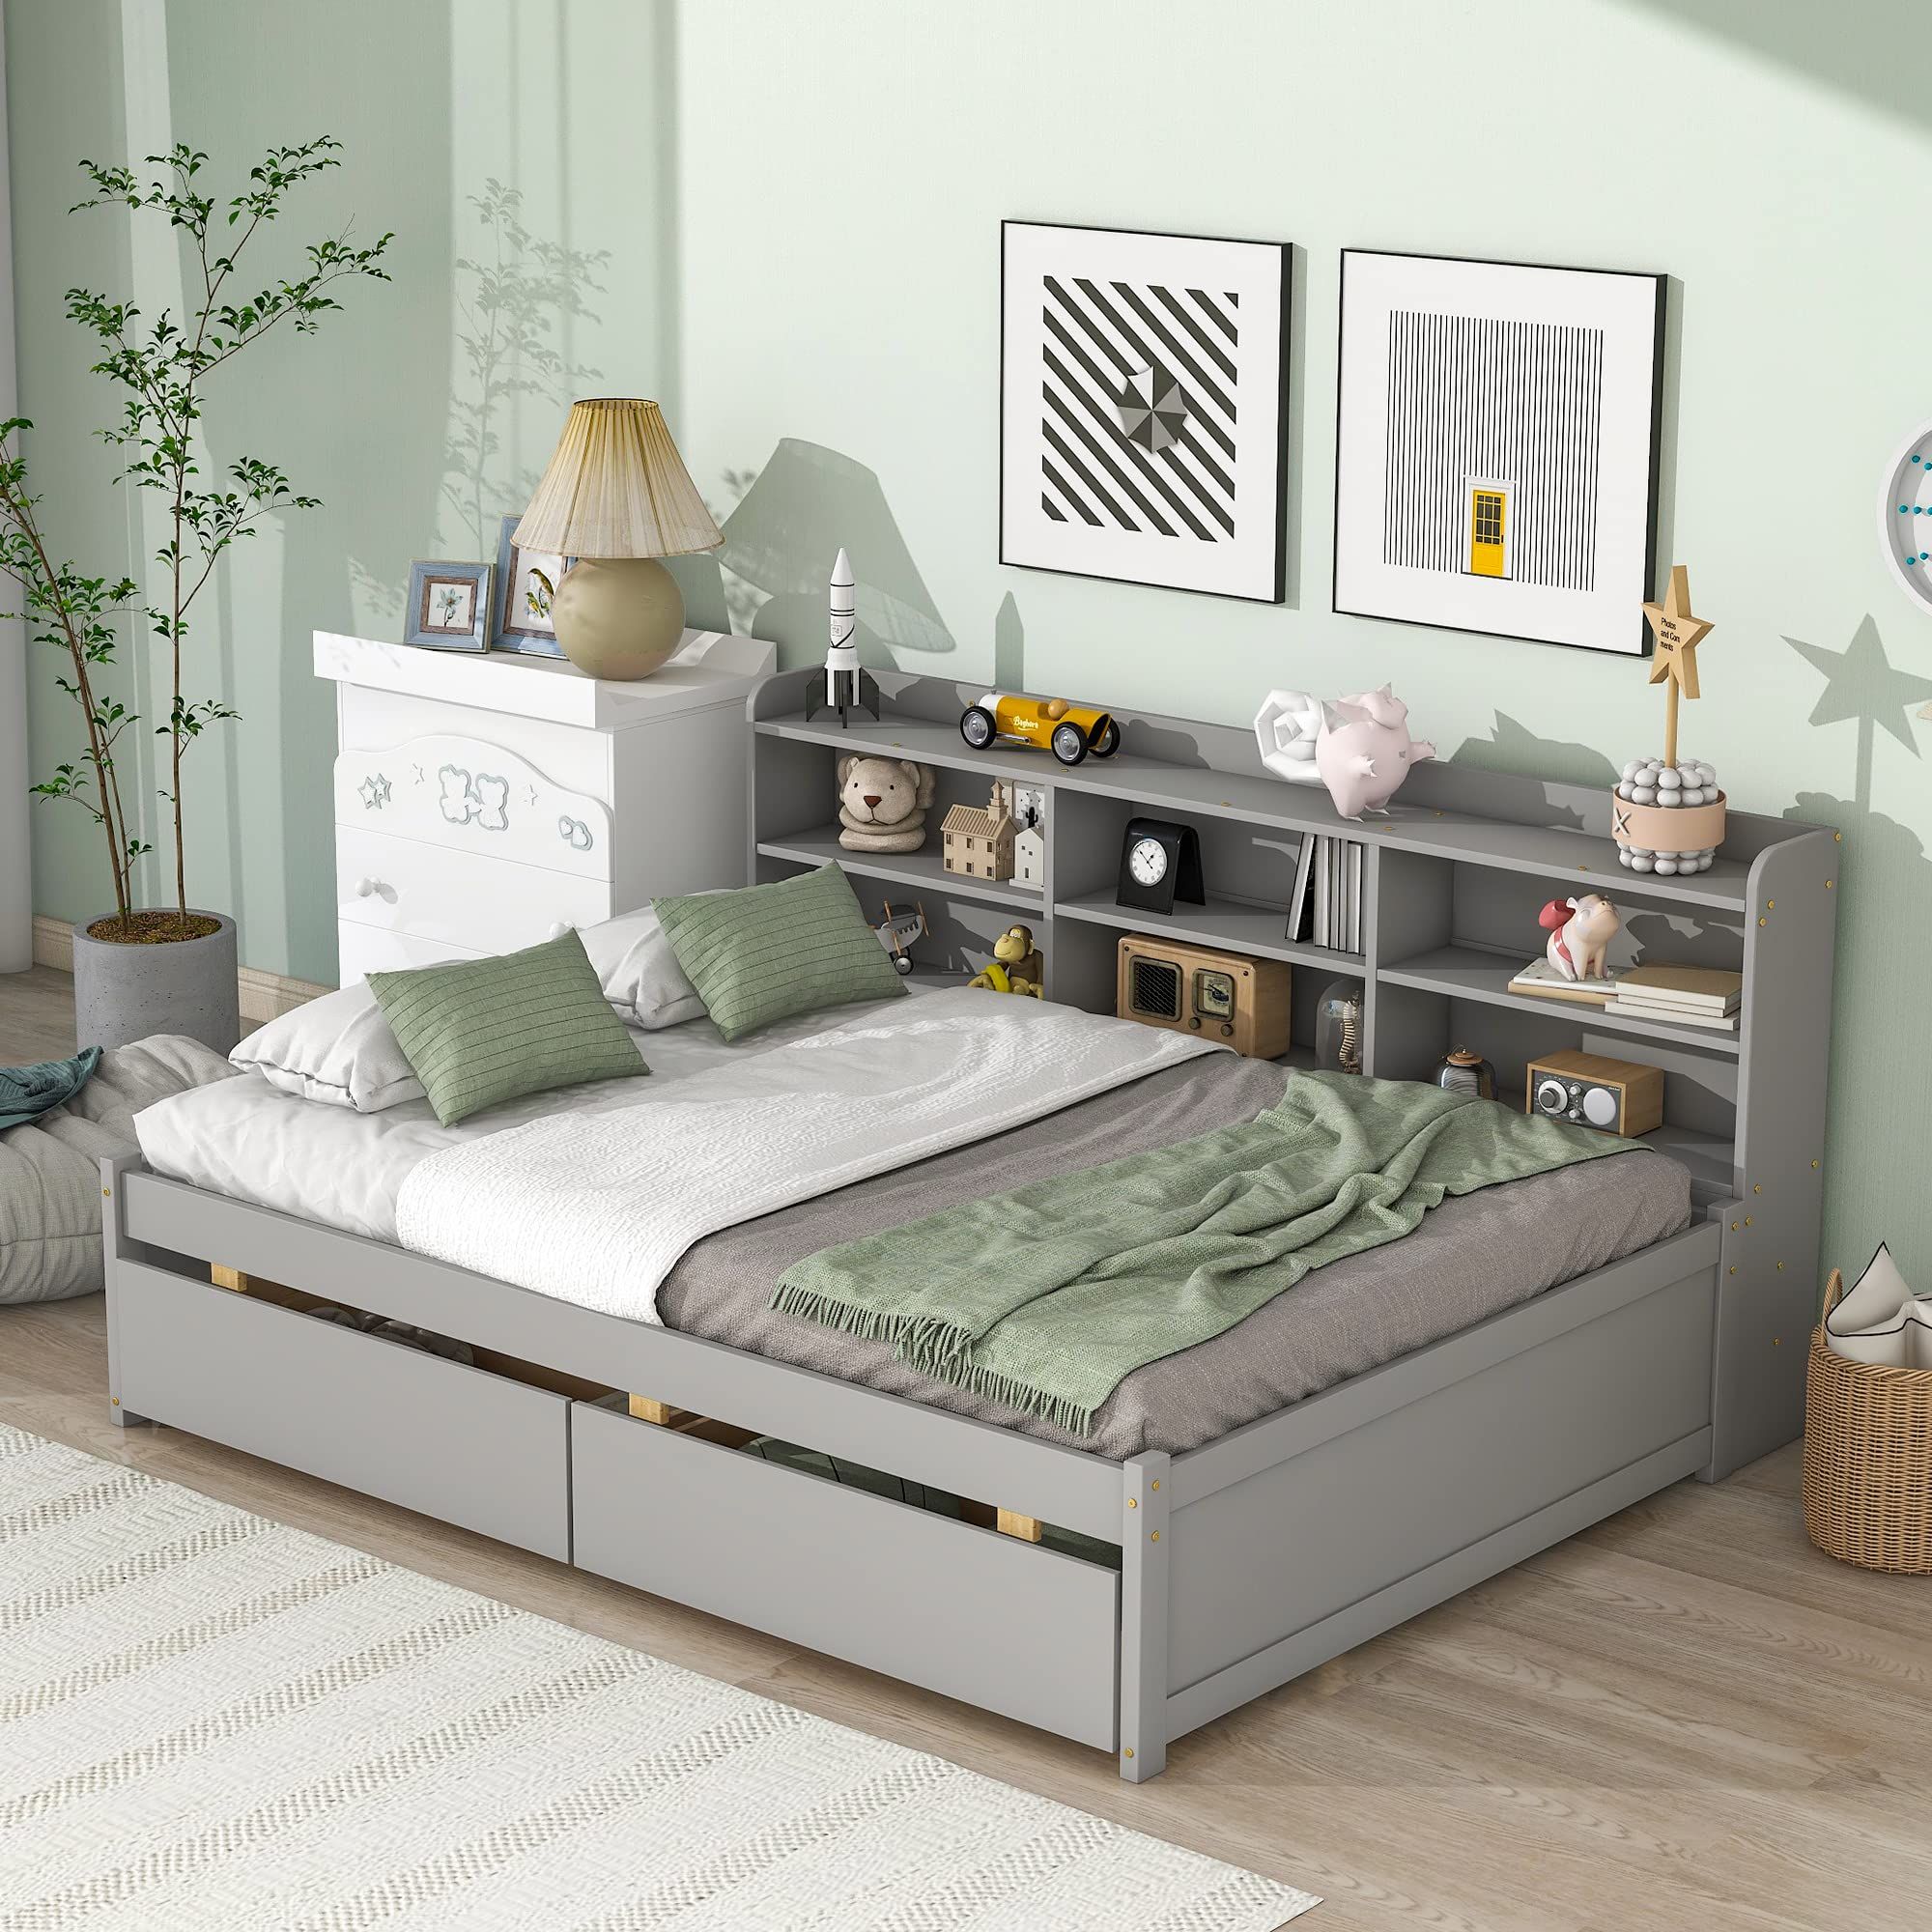 Single bed plus mattress and storage-